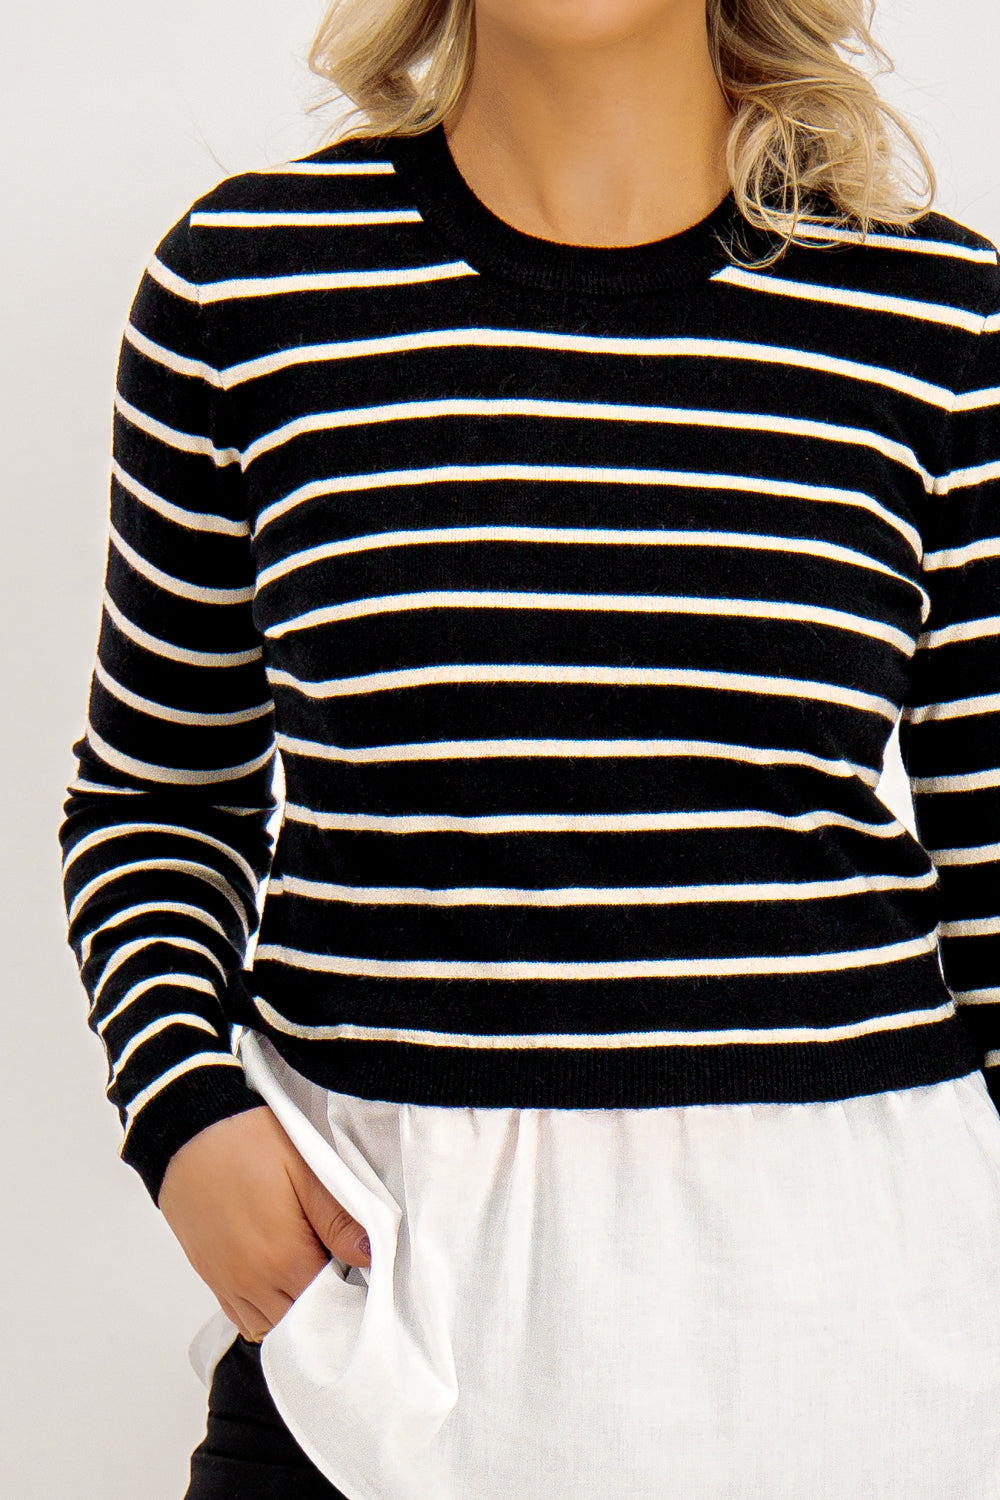 Angie Black & Cream Stripe Peplum Knit